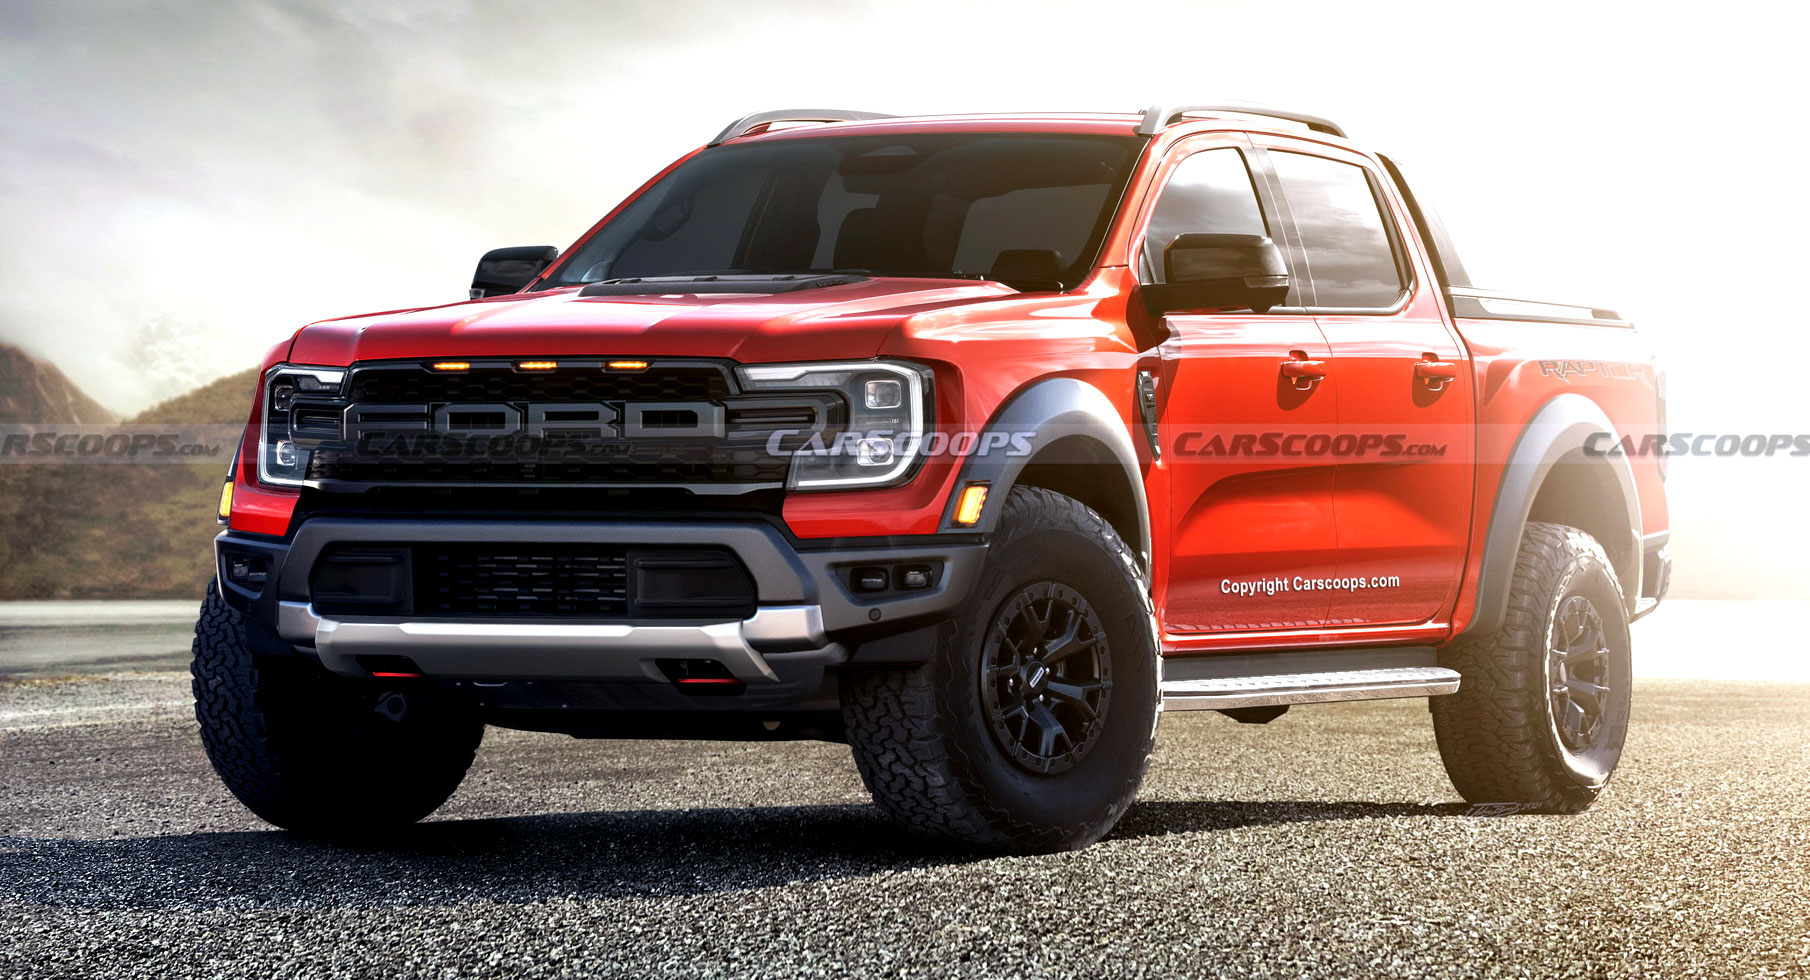 https://www.carscoops.com/wp-content/uploads/2021/12/2023-Ford-Ranger-Raptor-Red-Carscoops.jpg